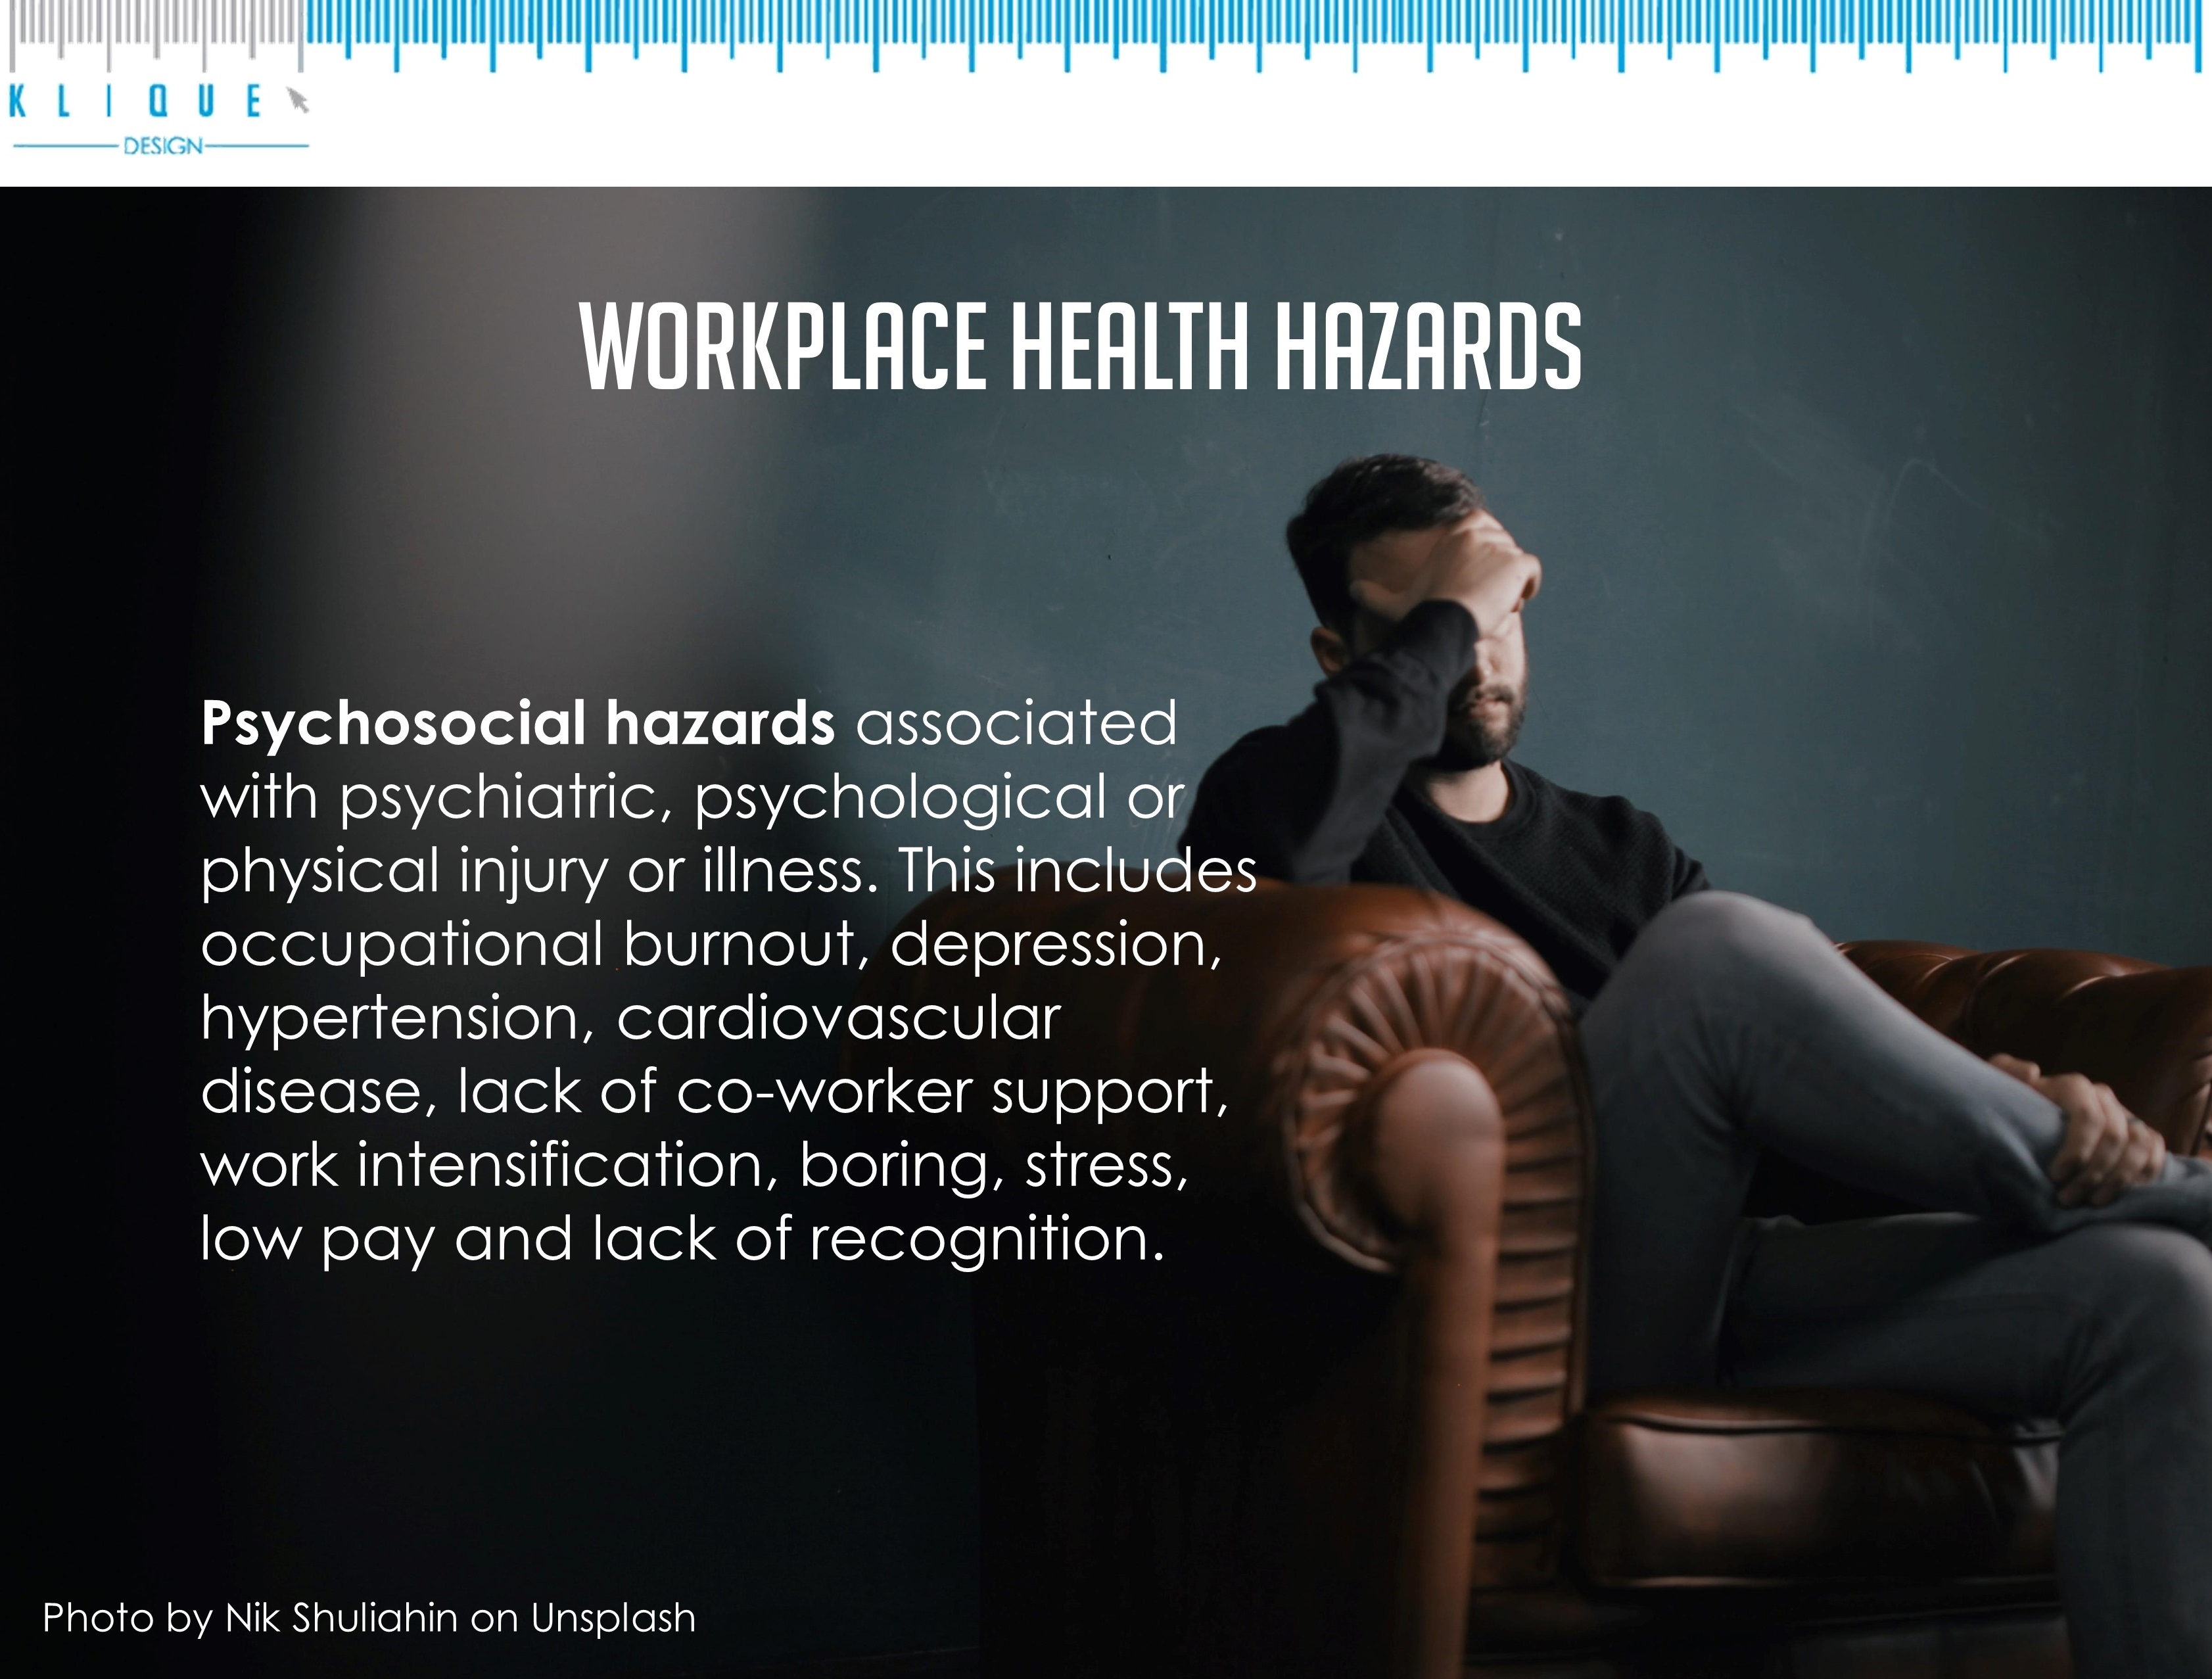 Workplace health hazards - psychosocial hazards